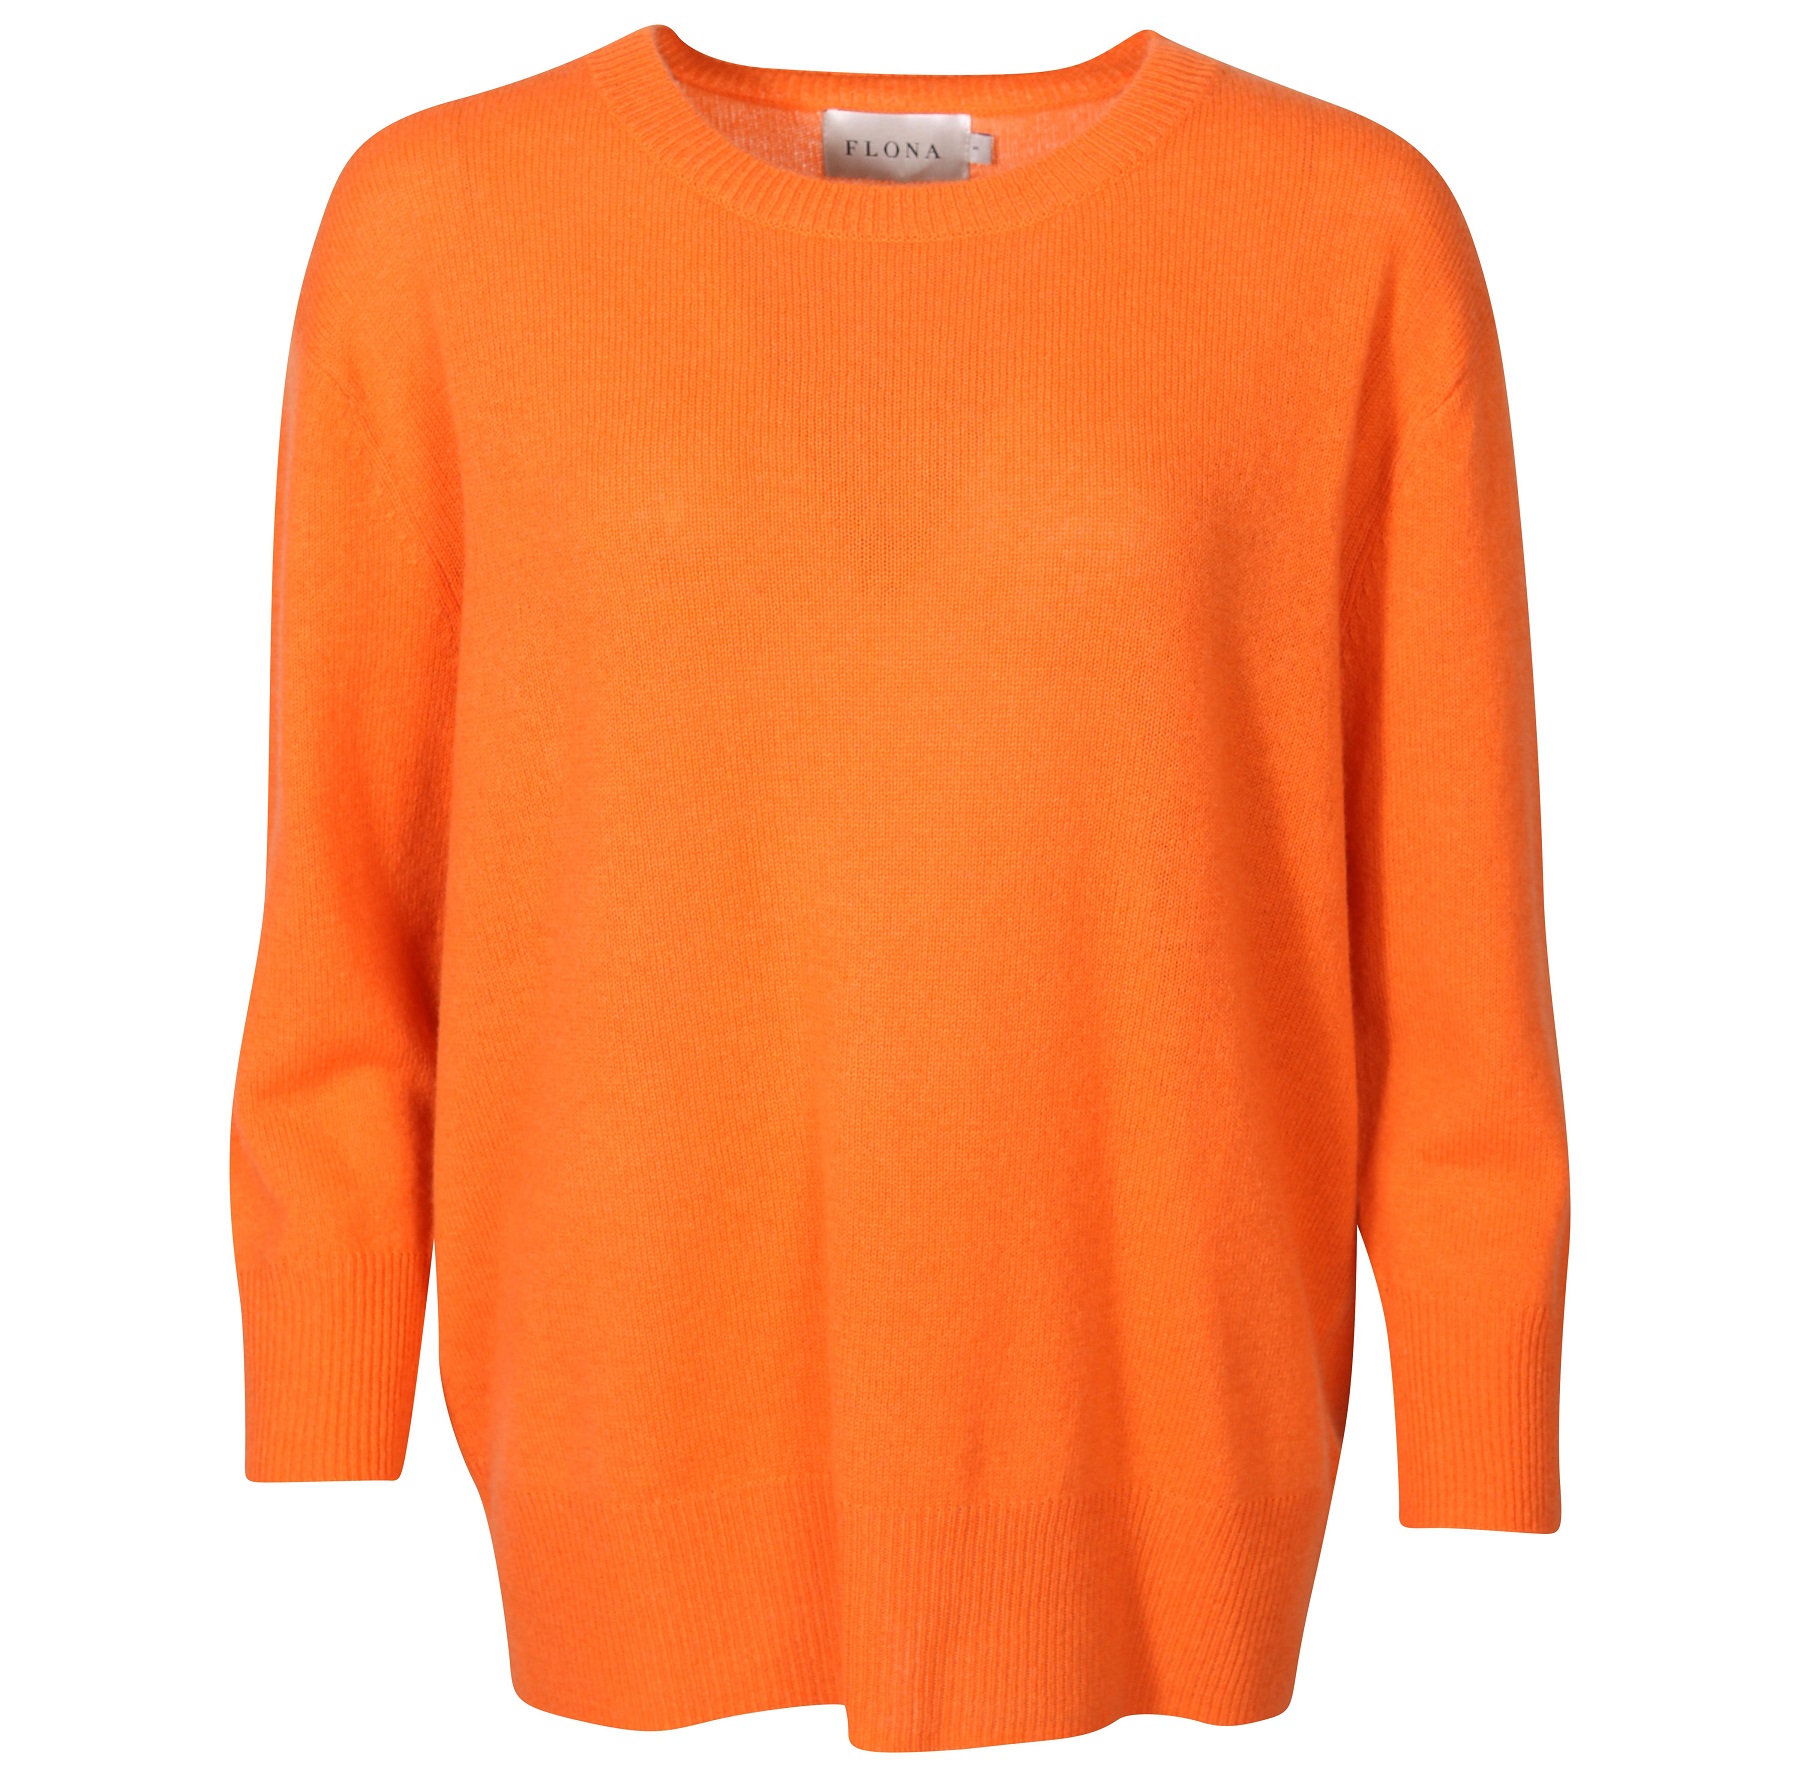 FLONA Cashmere Pullover in Orange XL